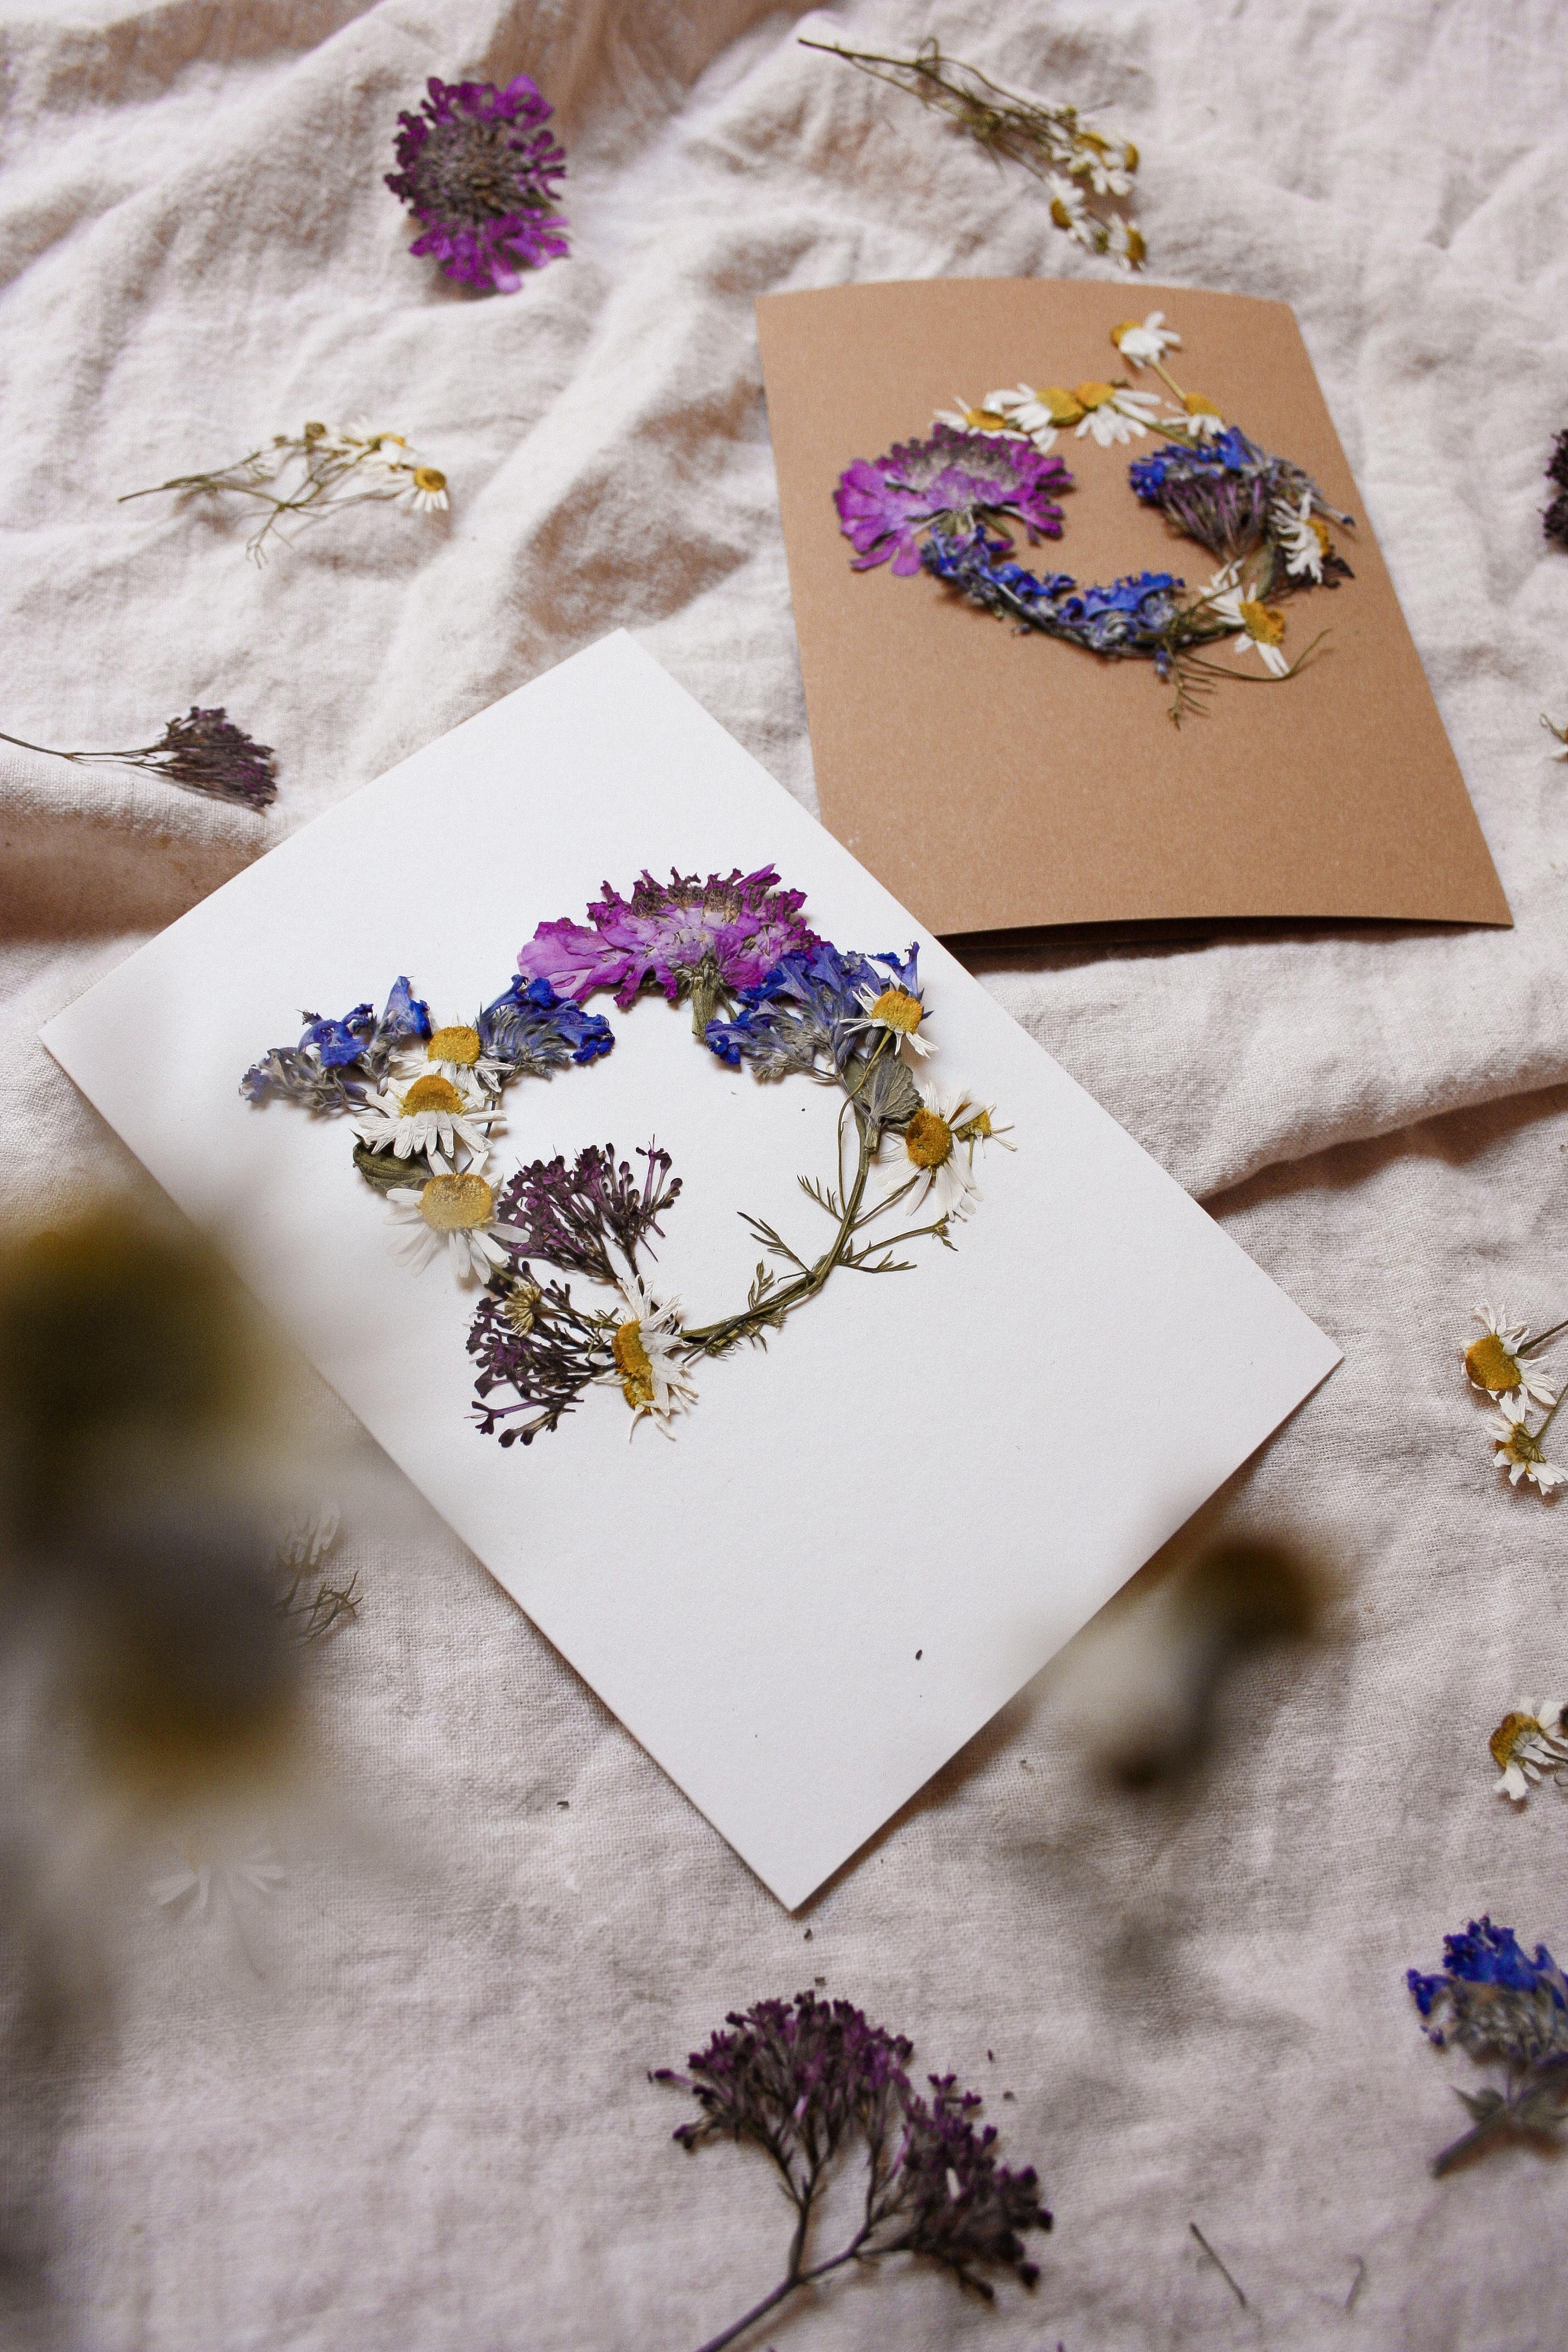 ♡ DIY Karten ♡
#diy #crafts #trockenblumen #driedflowers #karten #Geschenkideen #blumenliebe #Geschenke 